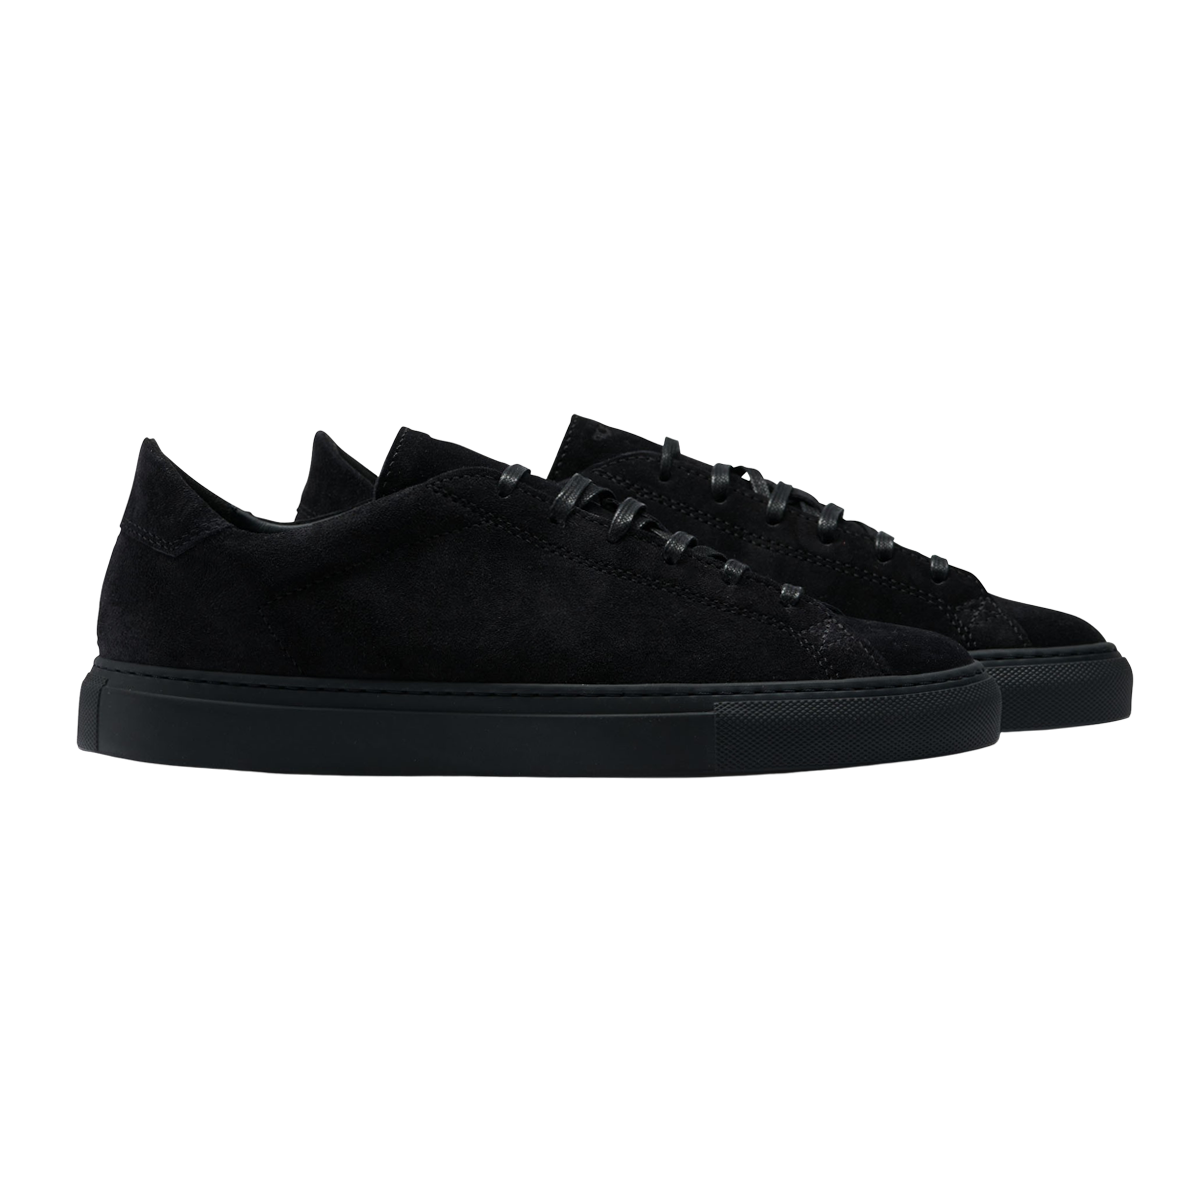 C.QP All Black Suede Racquet Sr Sneakers Side